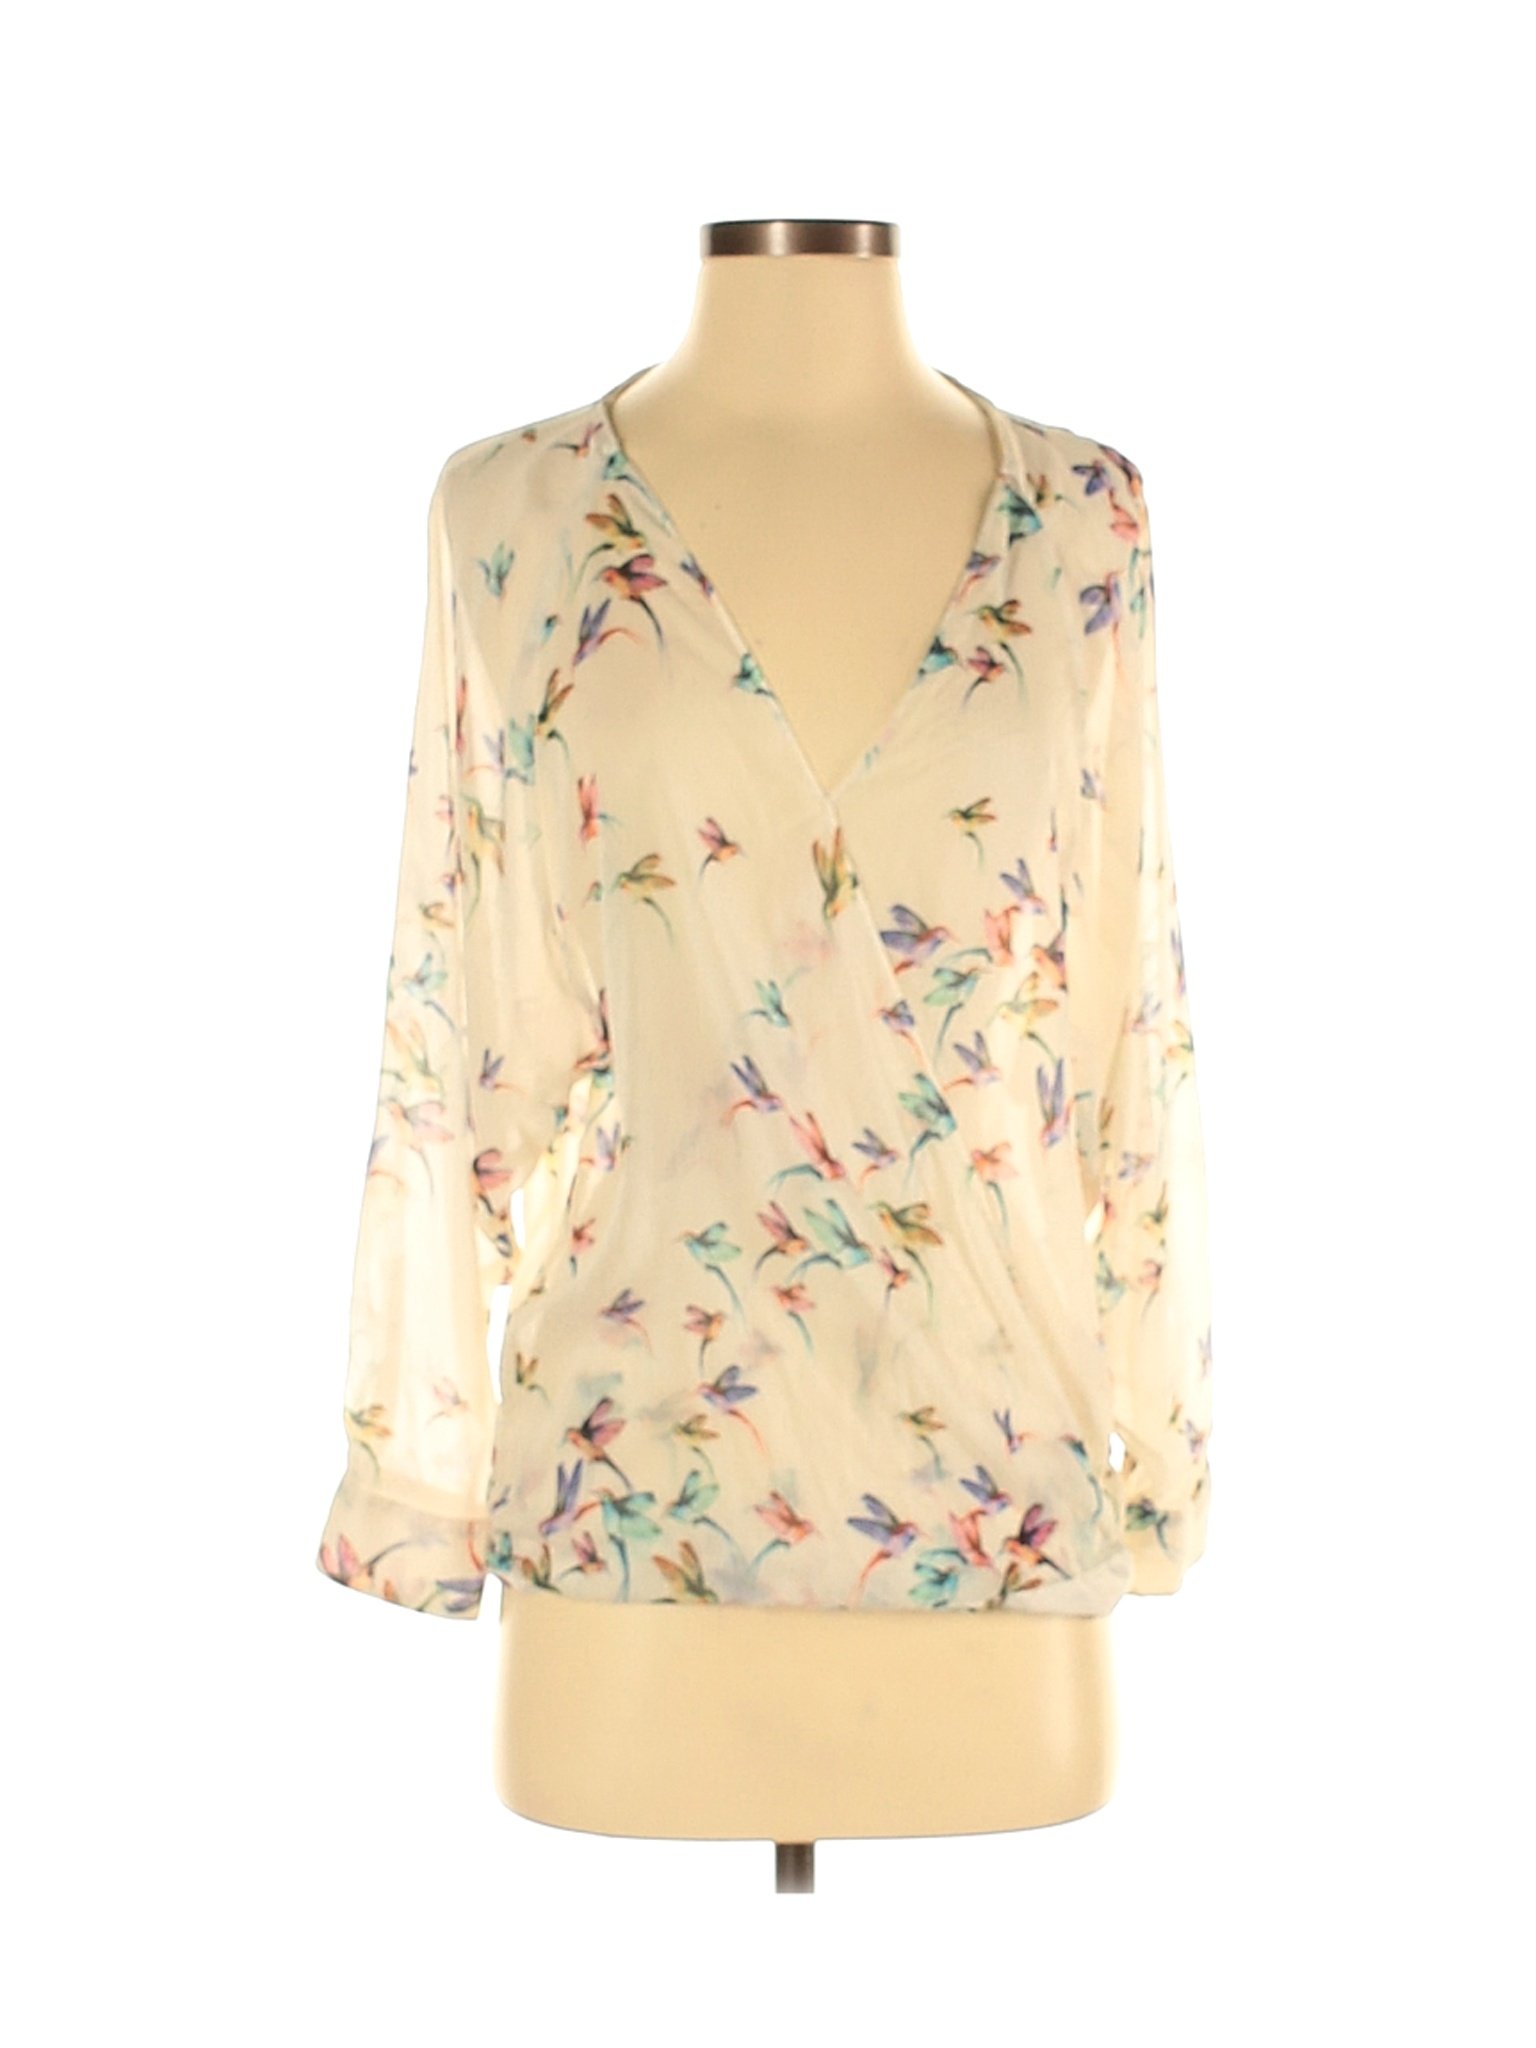 Trafaluc by Zara Women Ivory Long Sleeve Blouse XS | eBay